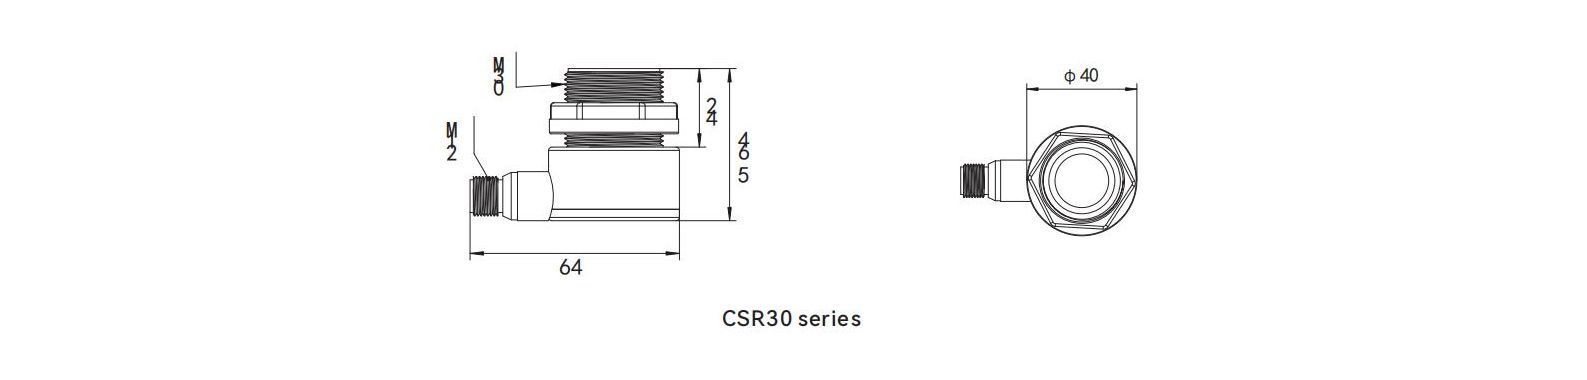 Ultrasonic Sensor Manufacturers Q45U Series Dimensions